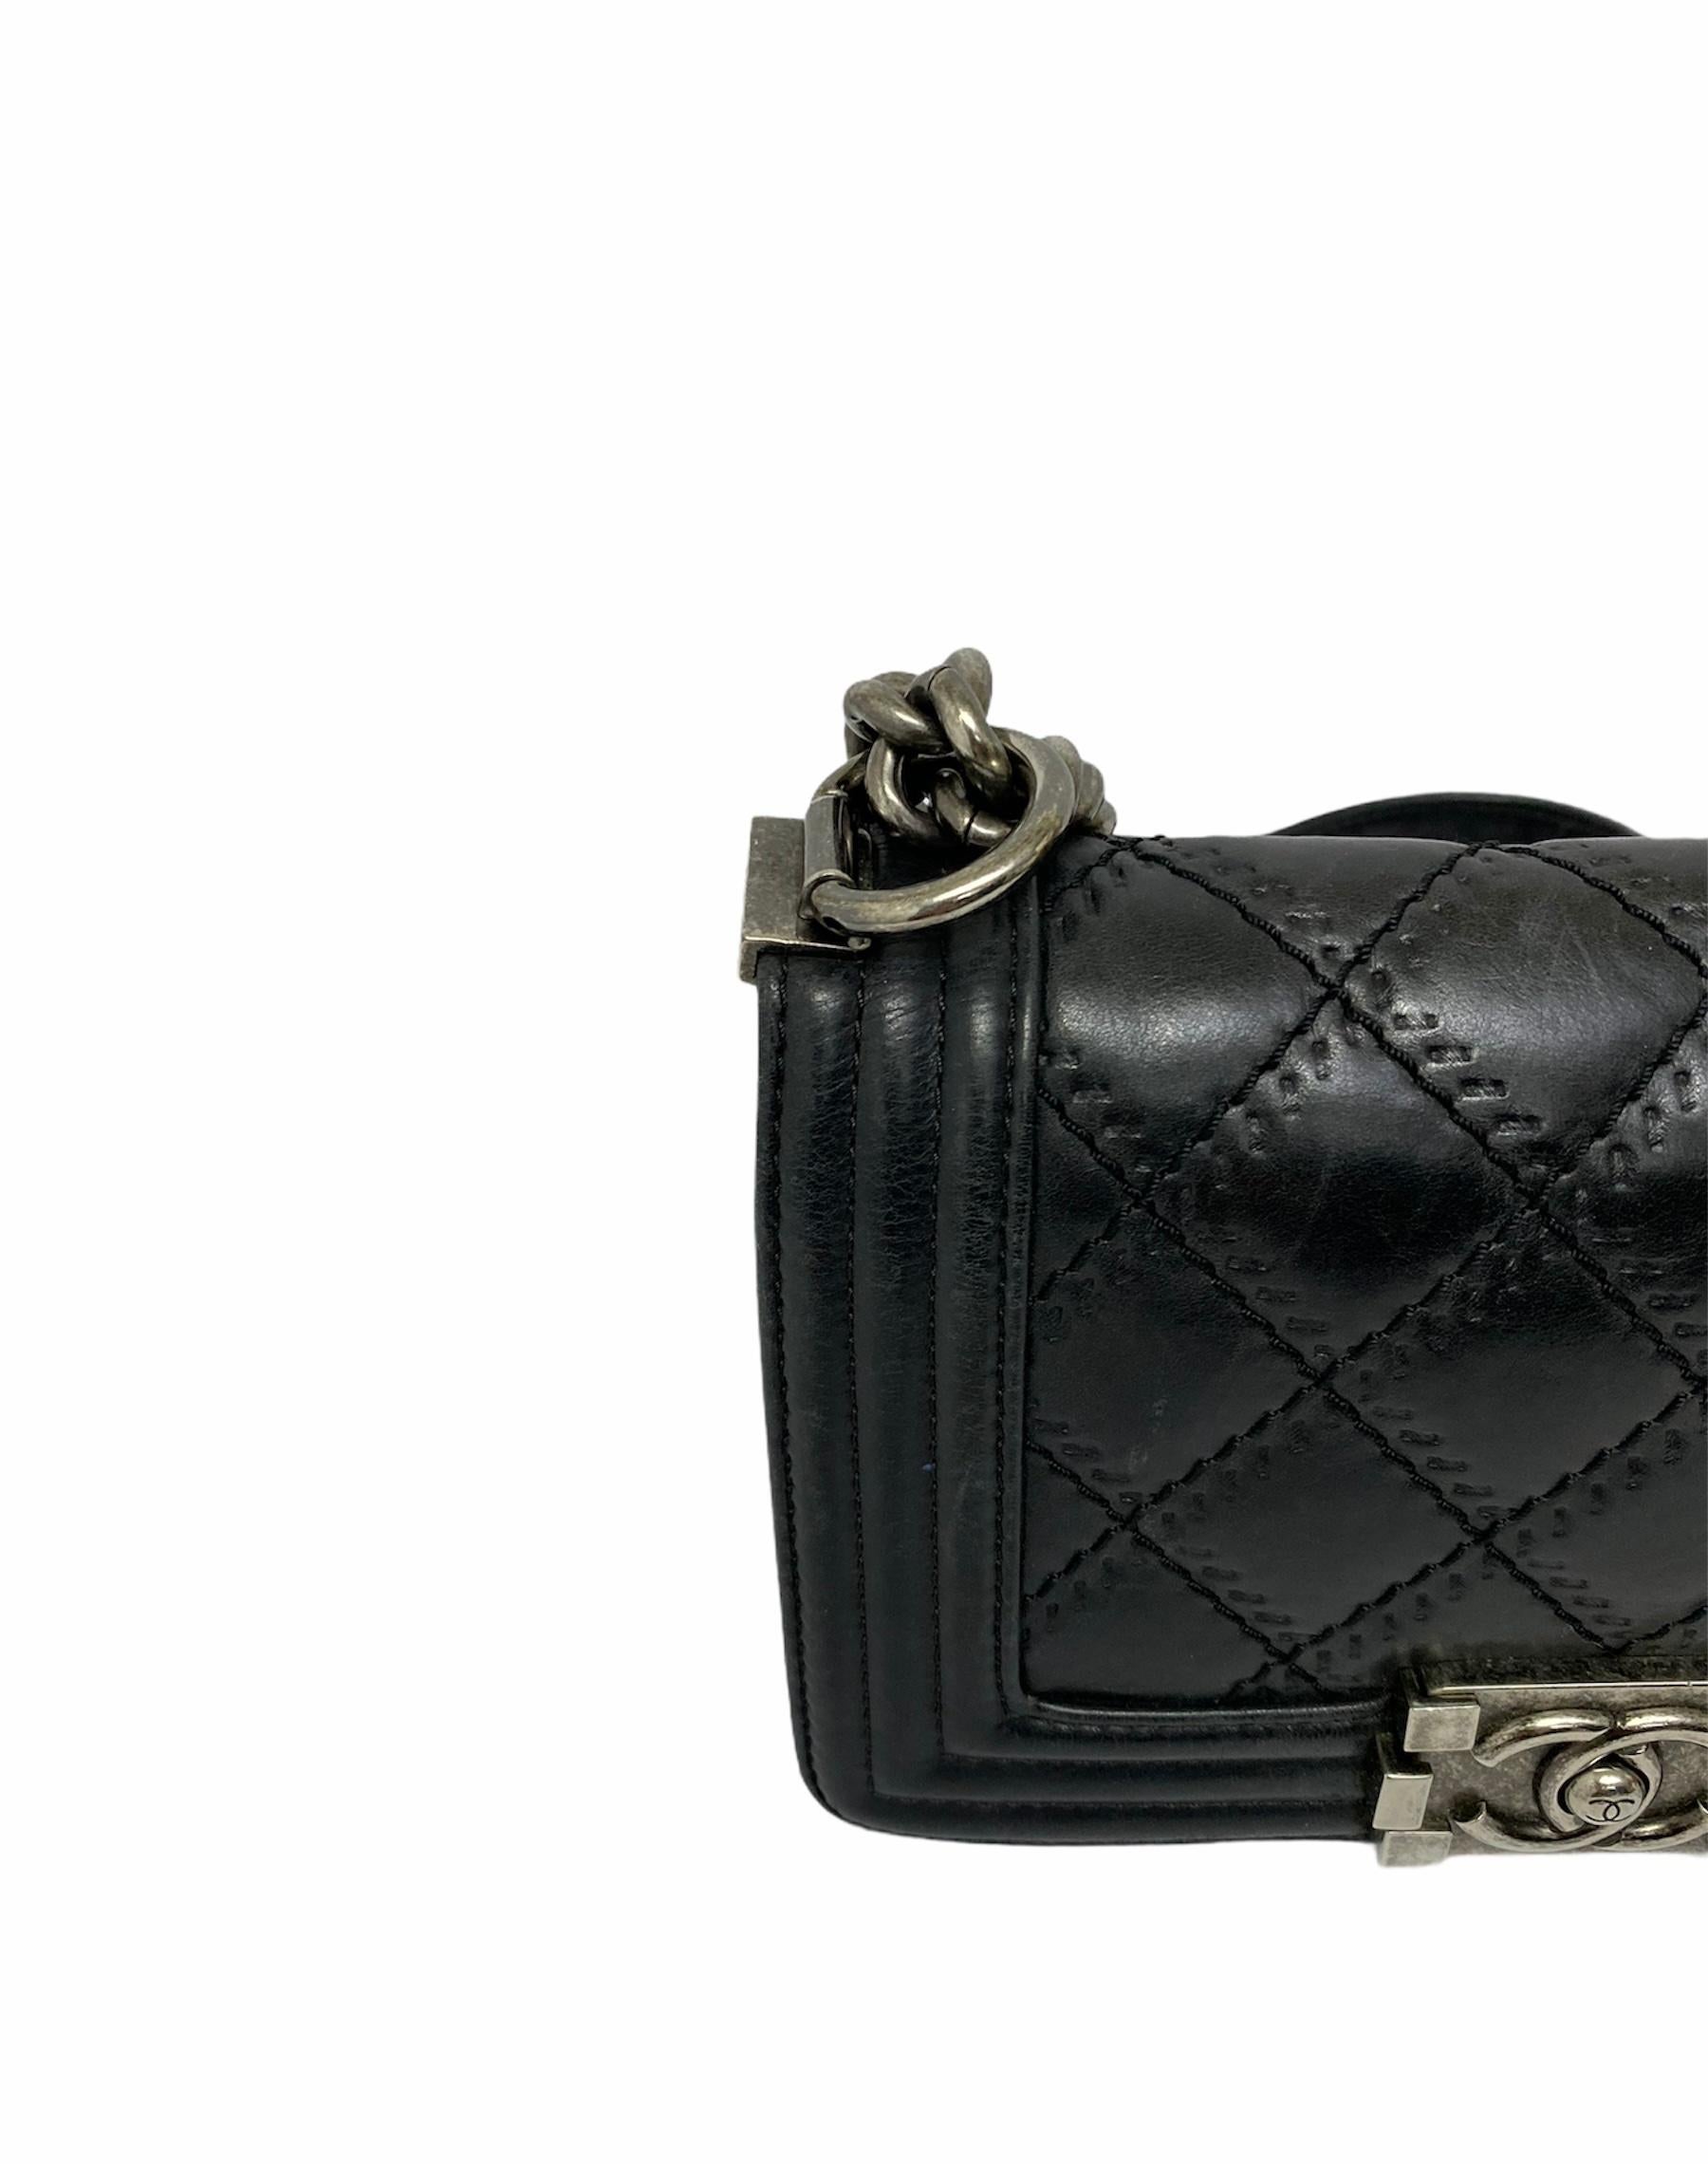 Chanel Black Leather  Boy Bag  6